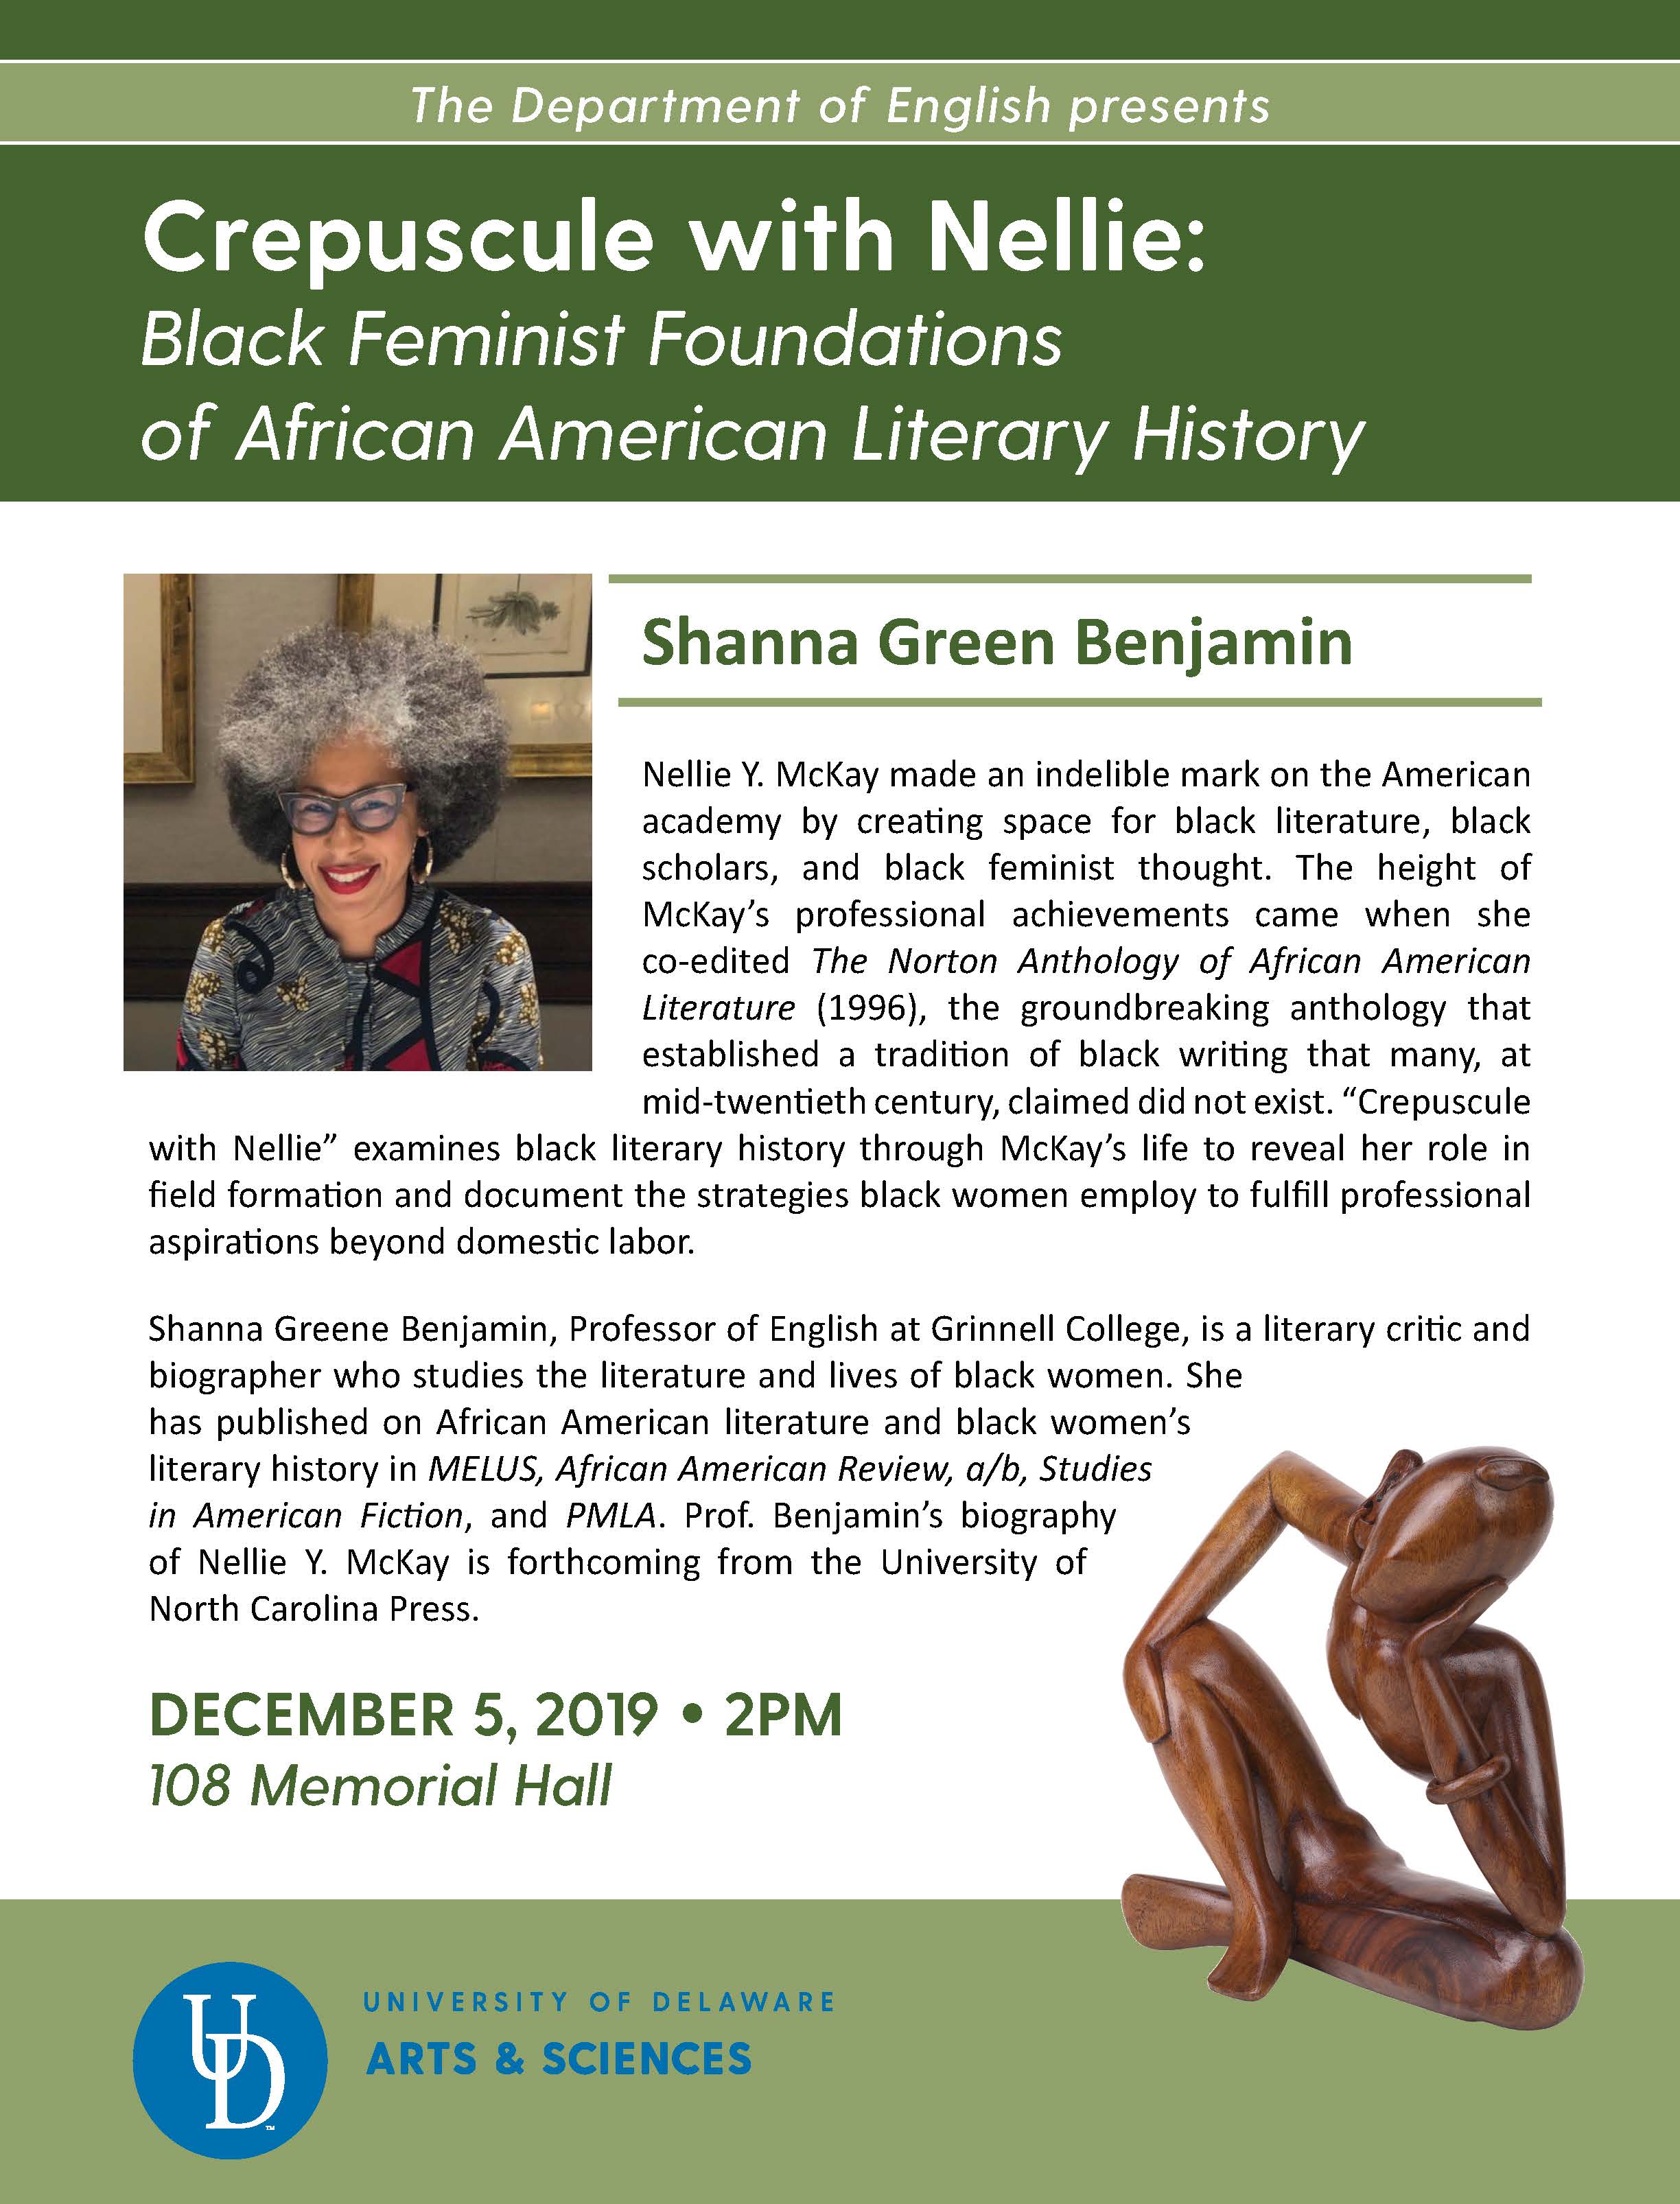 Shanna Benjamin to speak at the University of Delaware on December 5, 2019.